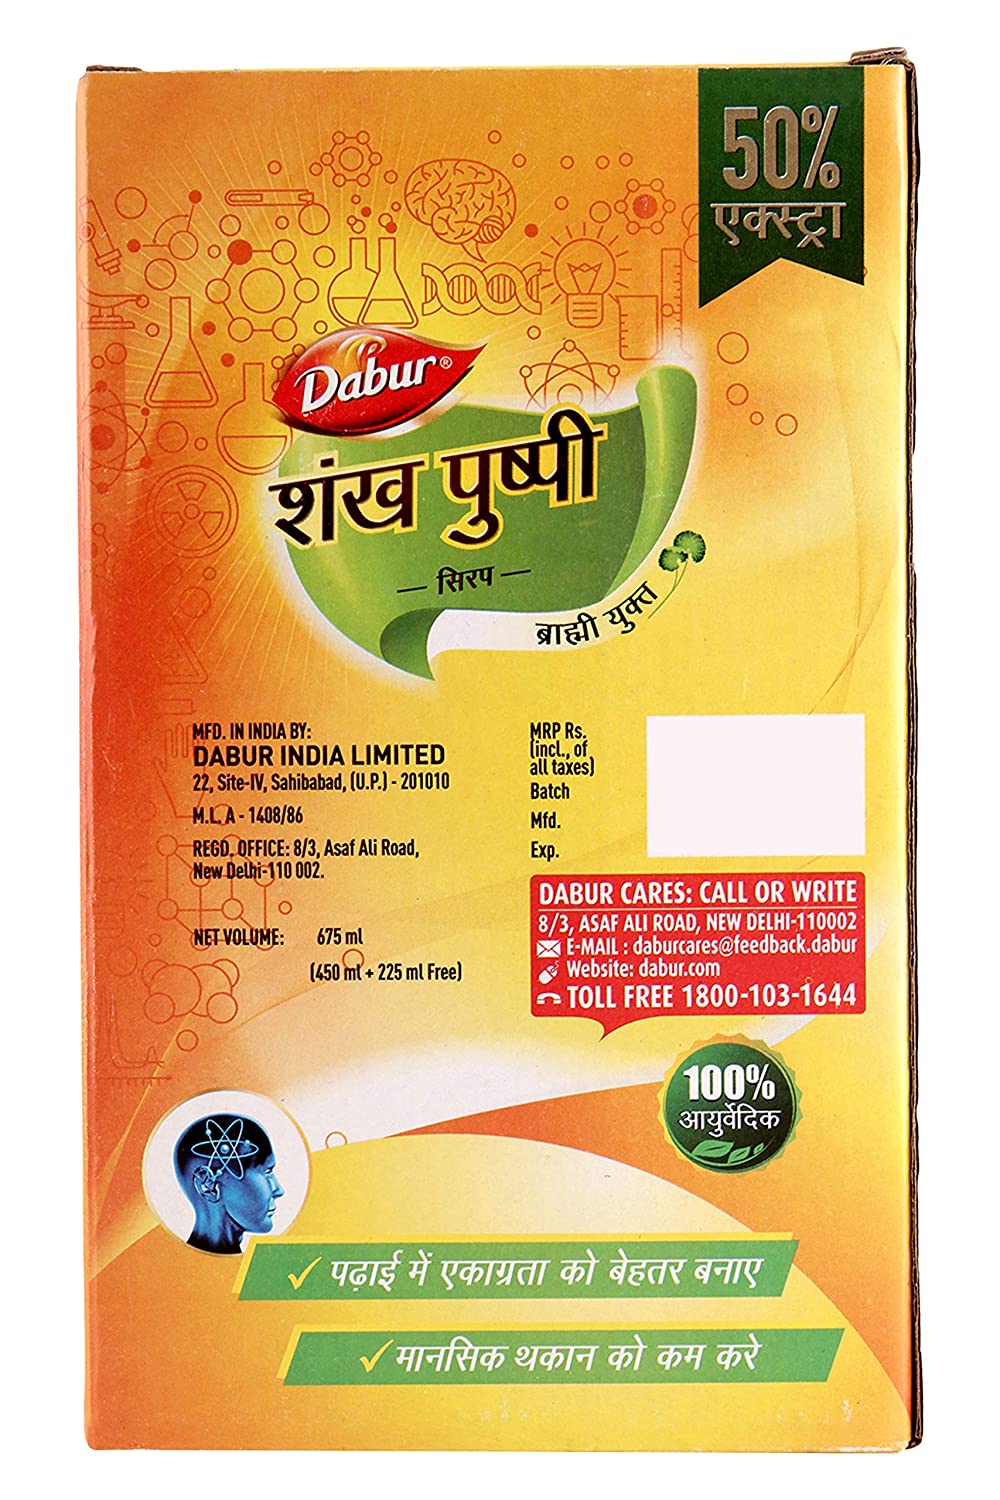 Dabur Shankh Pushpi Syrup for Mental Health - (450 Ml+225ml free) - Caresupp.in